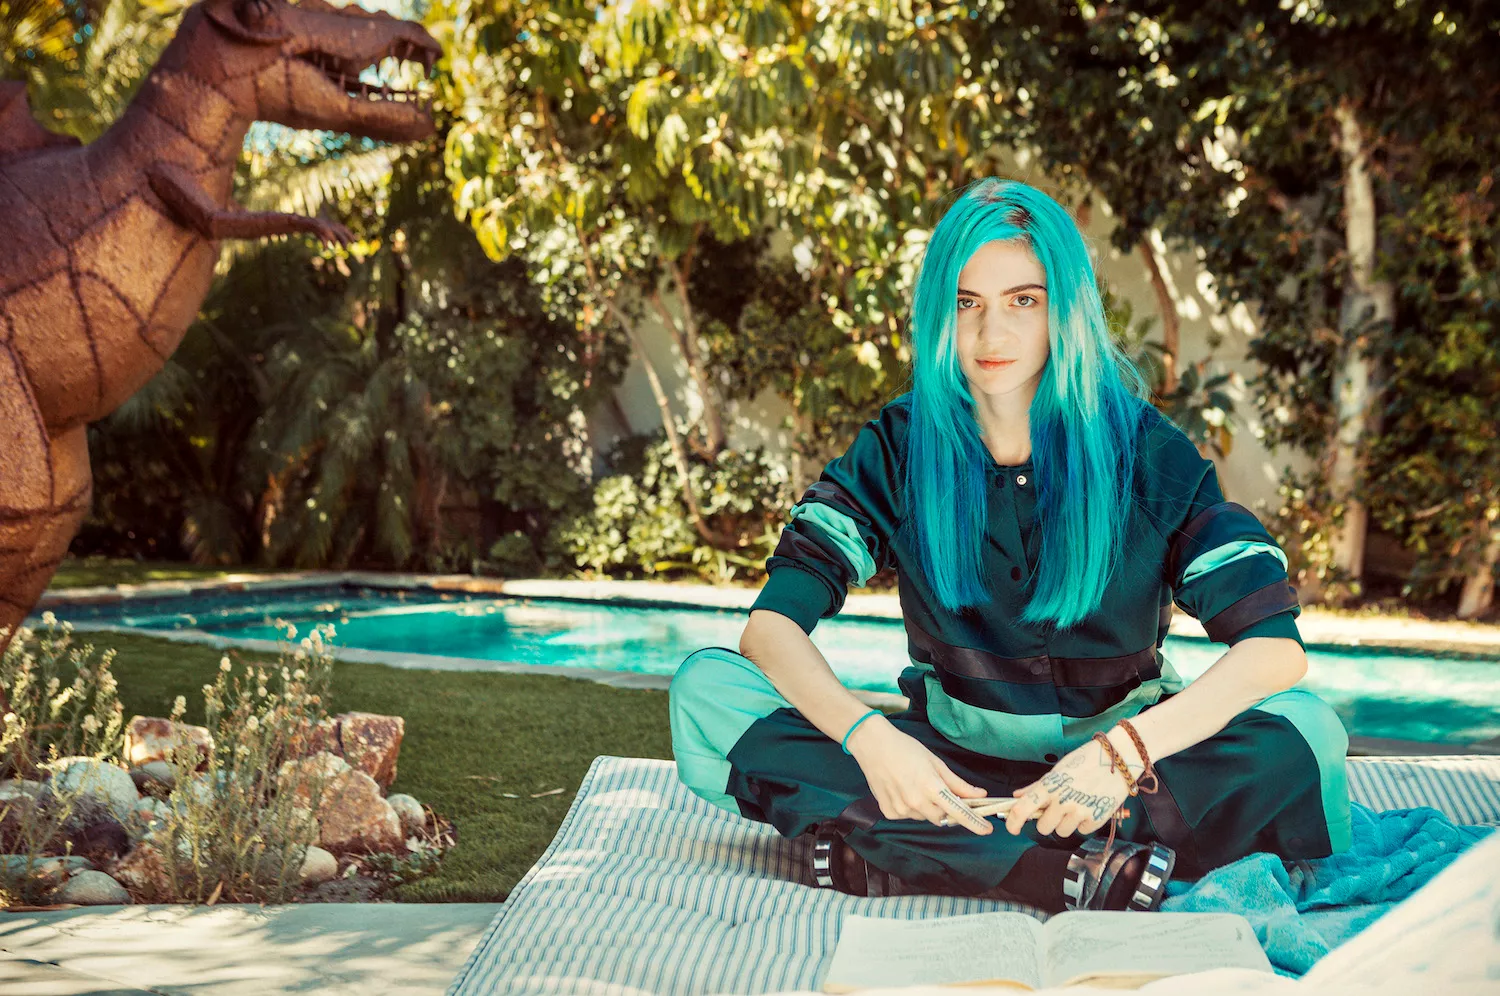 Grimes samarbeider med Janelle Monáe på ny Tidal-eksklusiv låt og musikkvideo